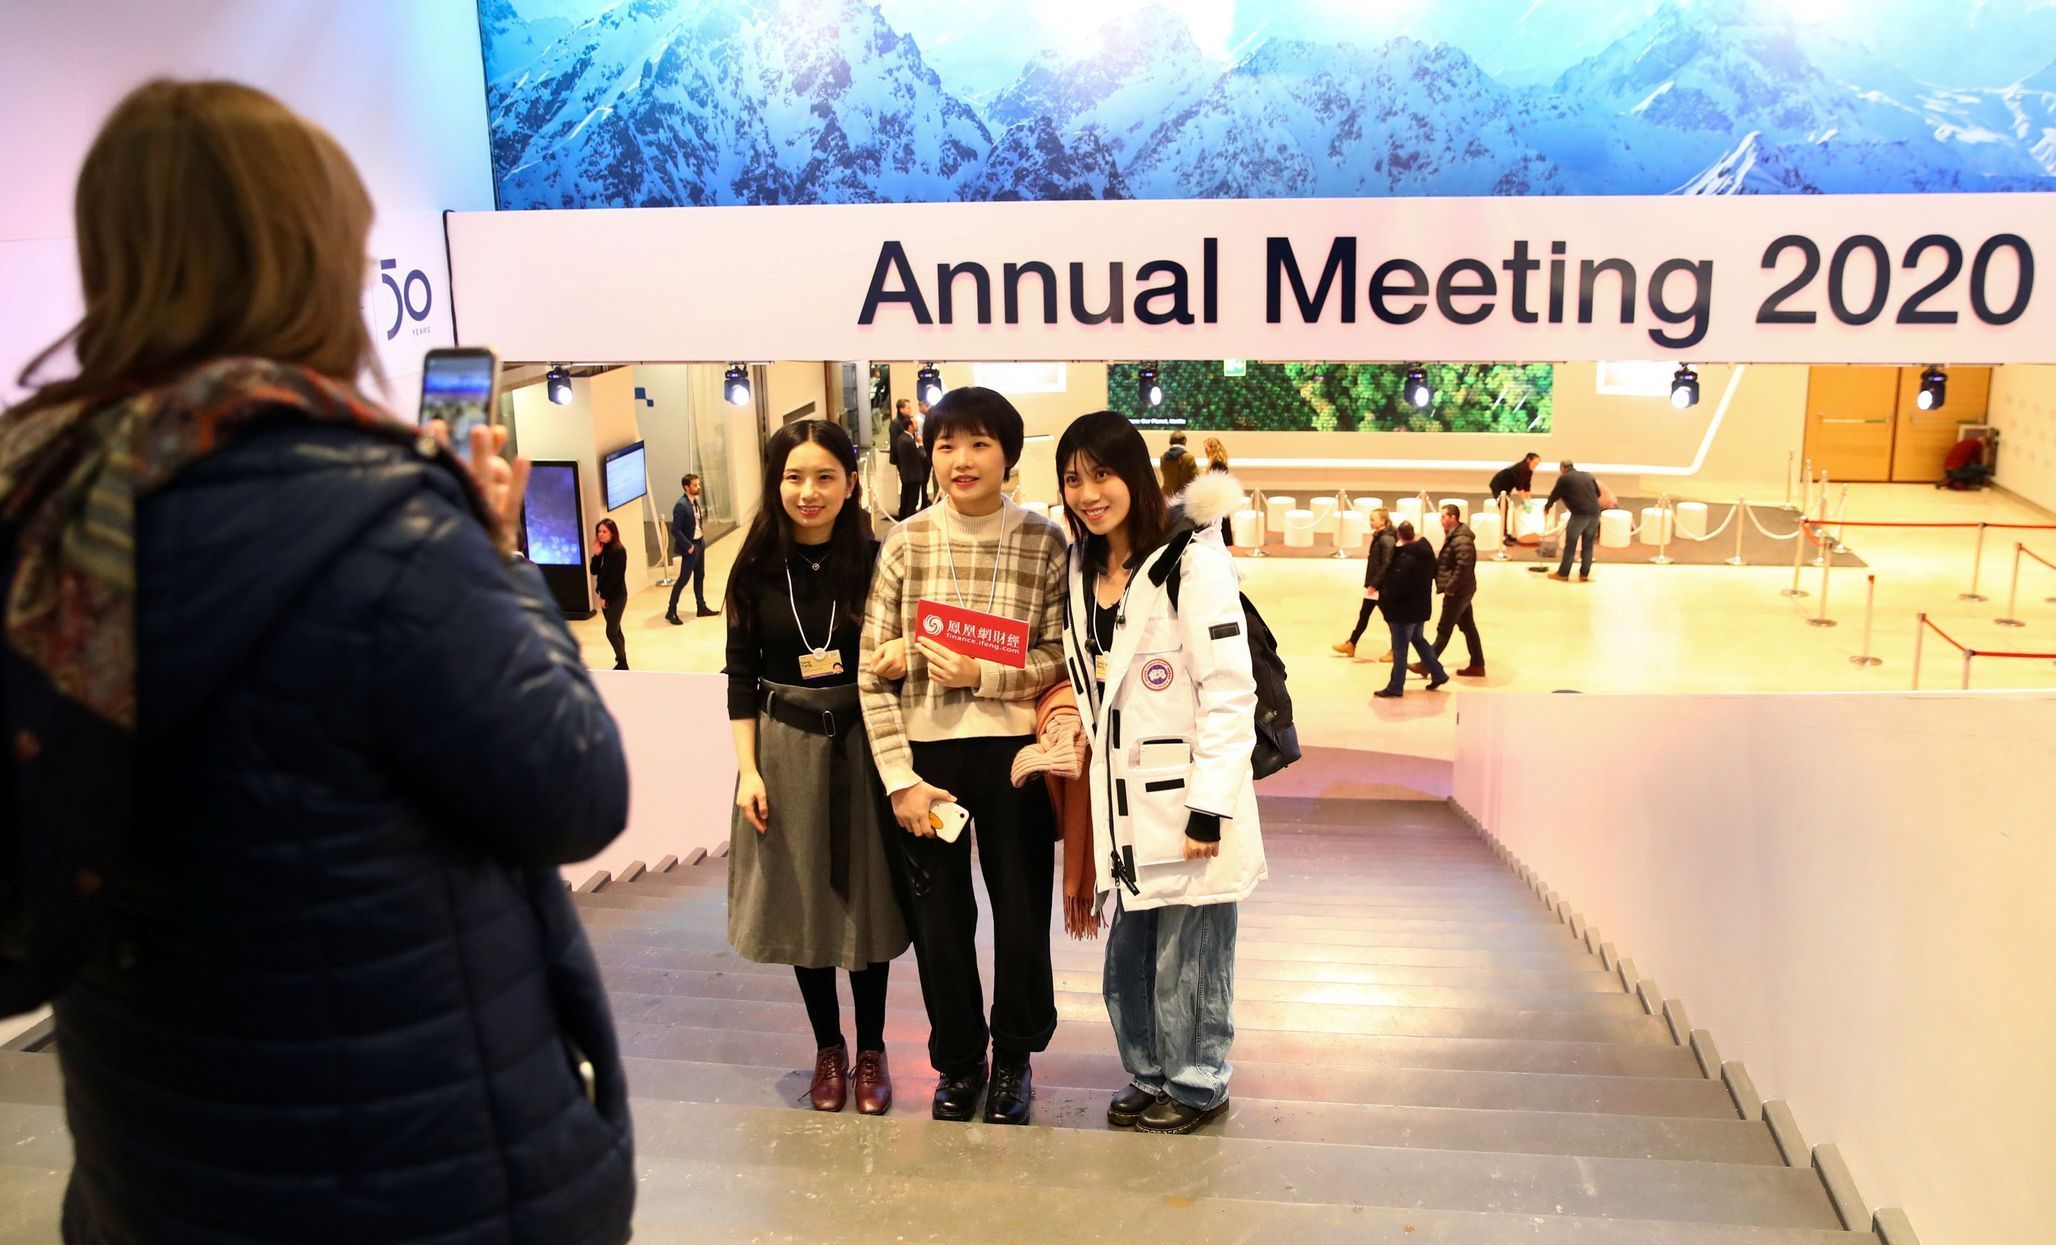 Světové ekonomické fórum Davos 2020